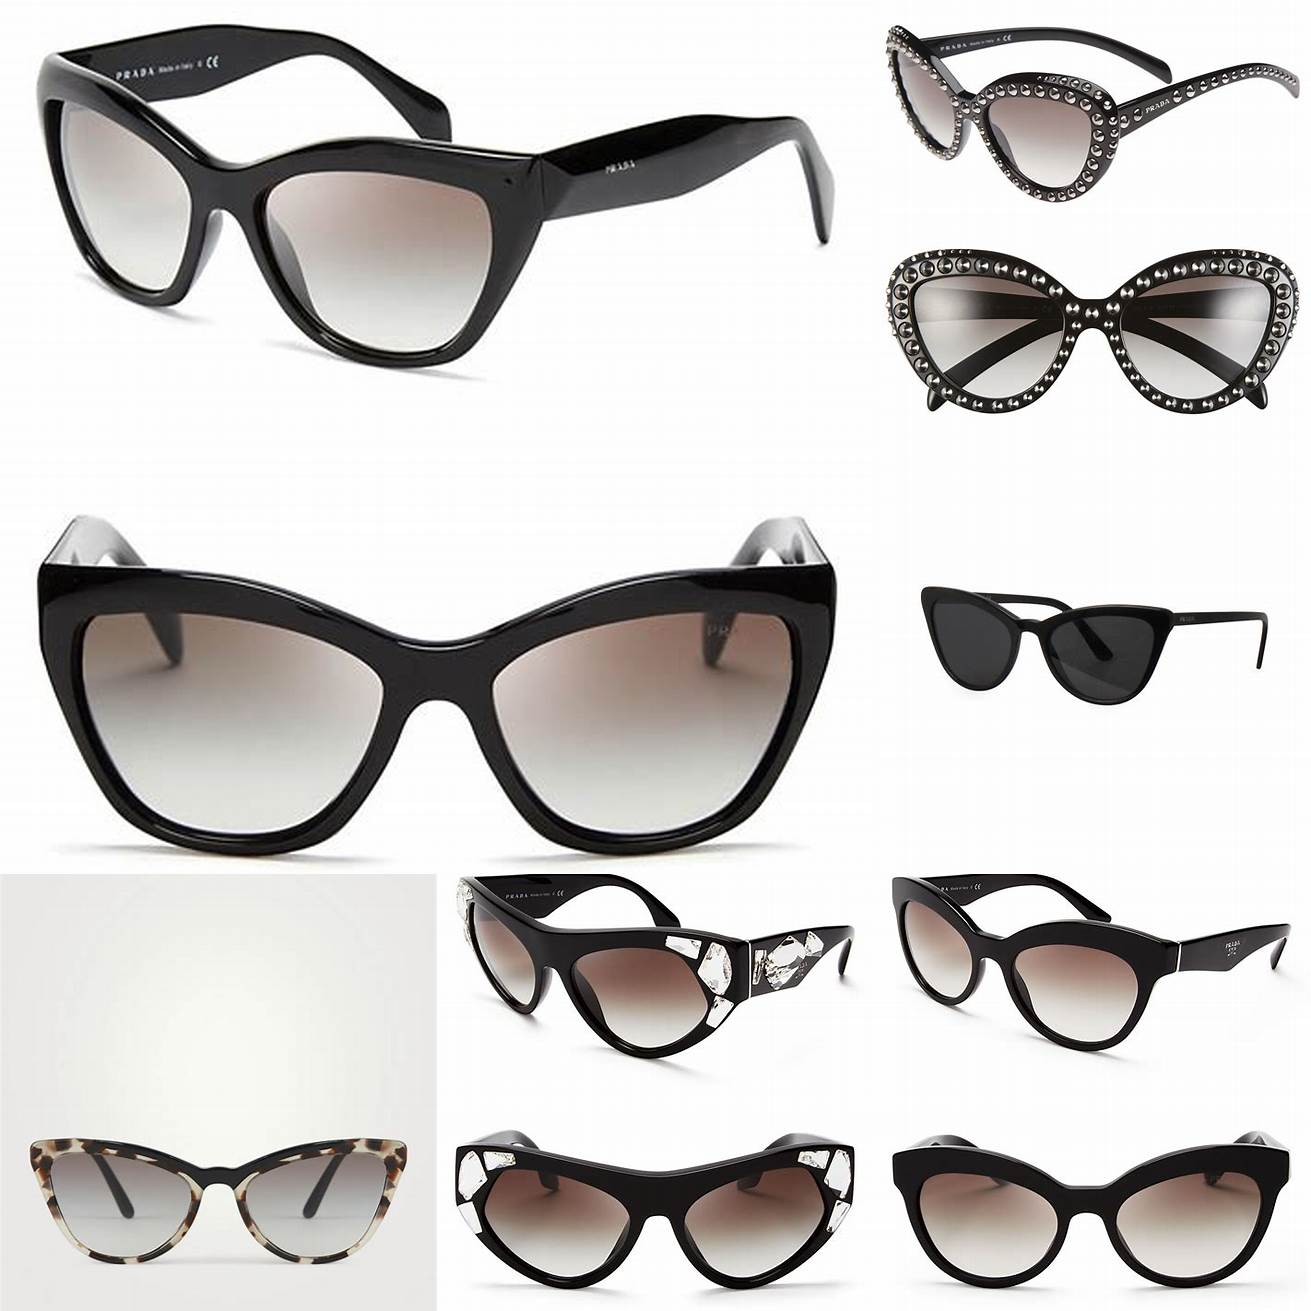 Q What colors do cat eye Prada sunglasses come in